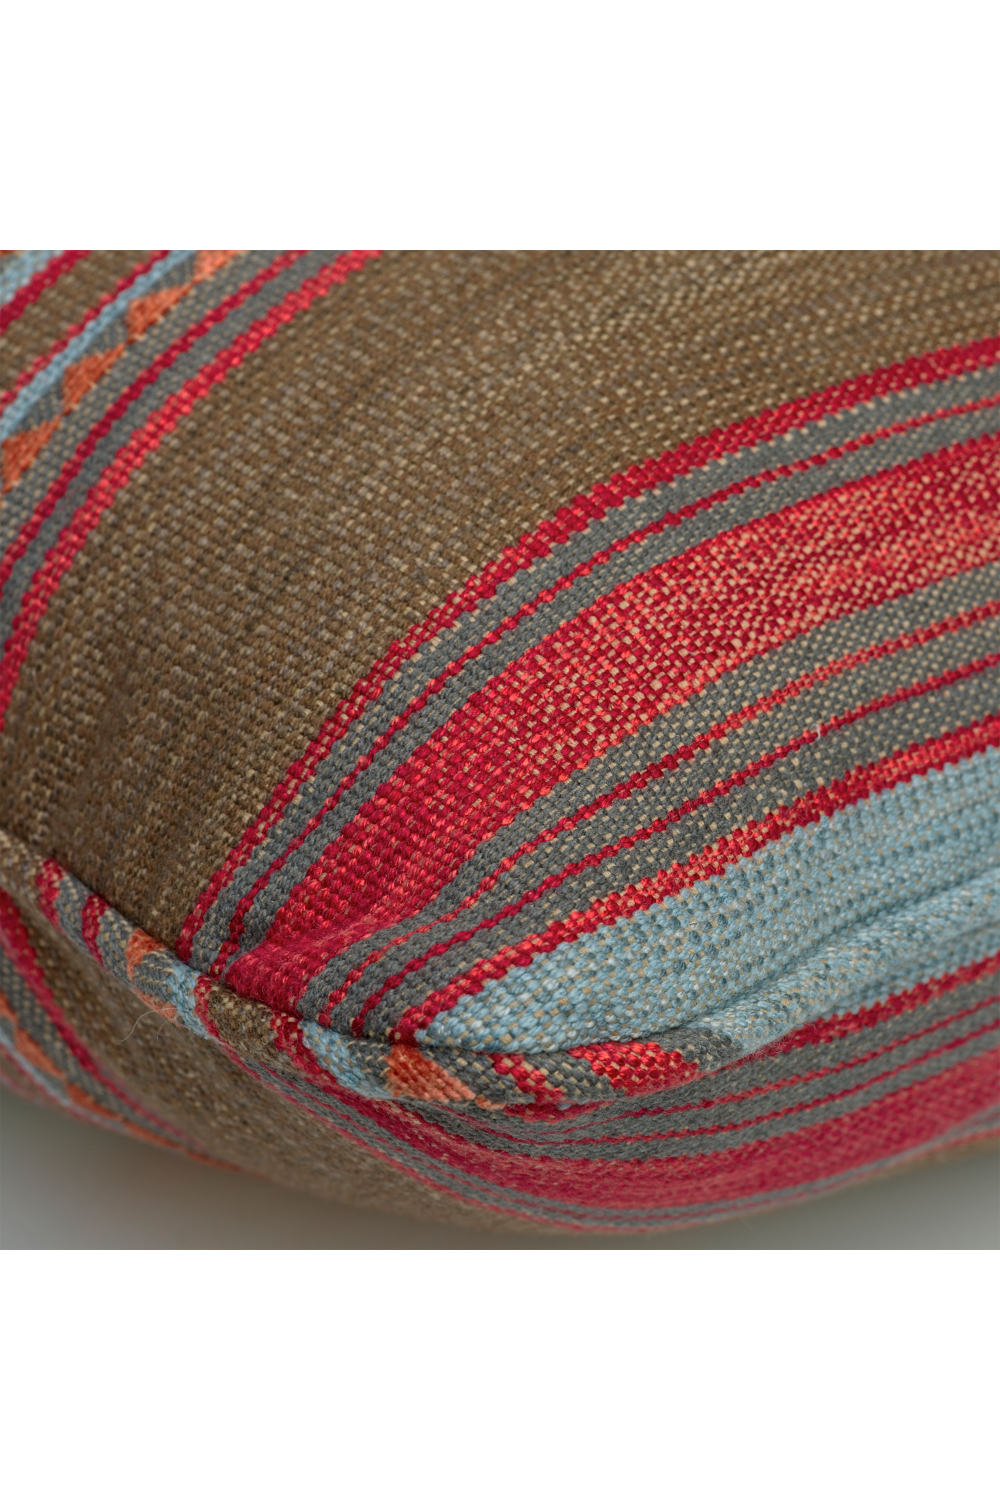 Kilim Striped Cushion | Andrew Martin Las Salinas | Oroa.com